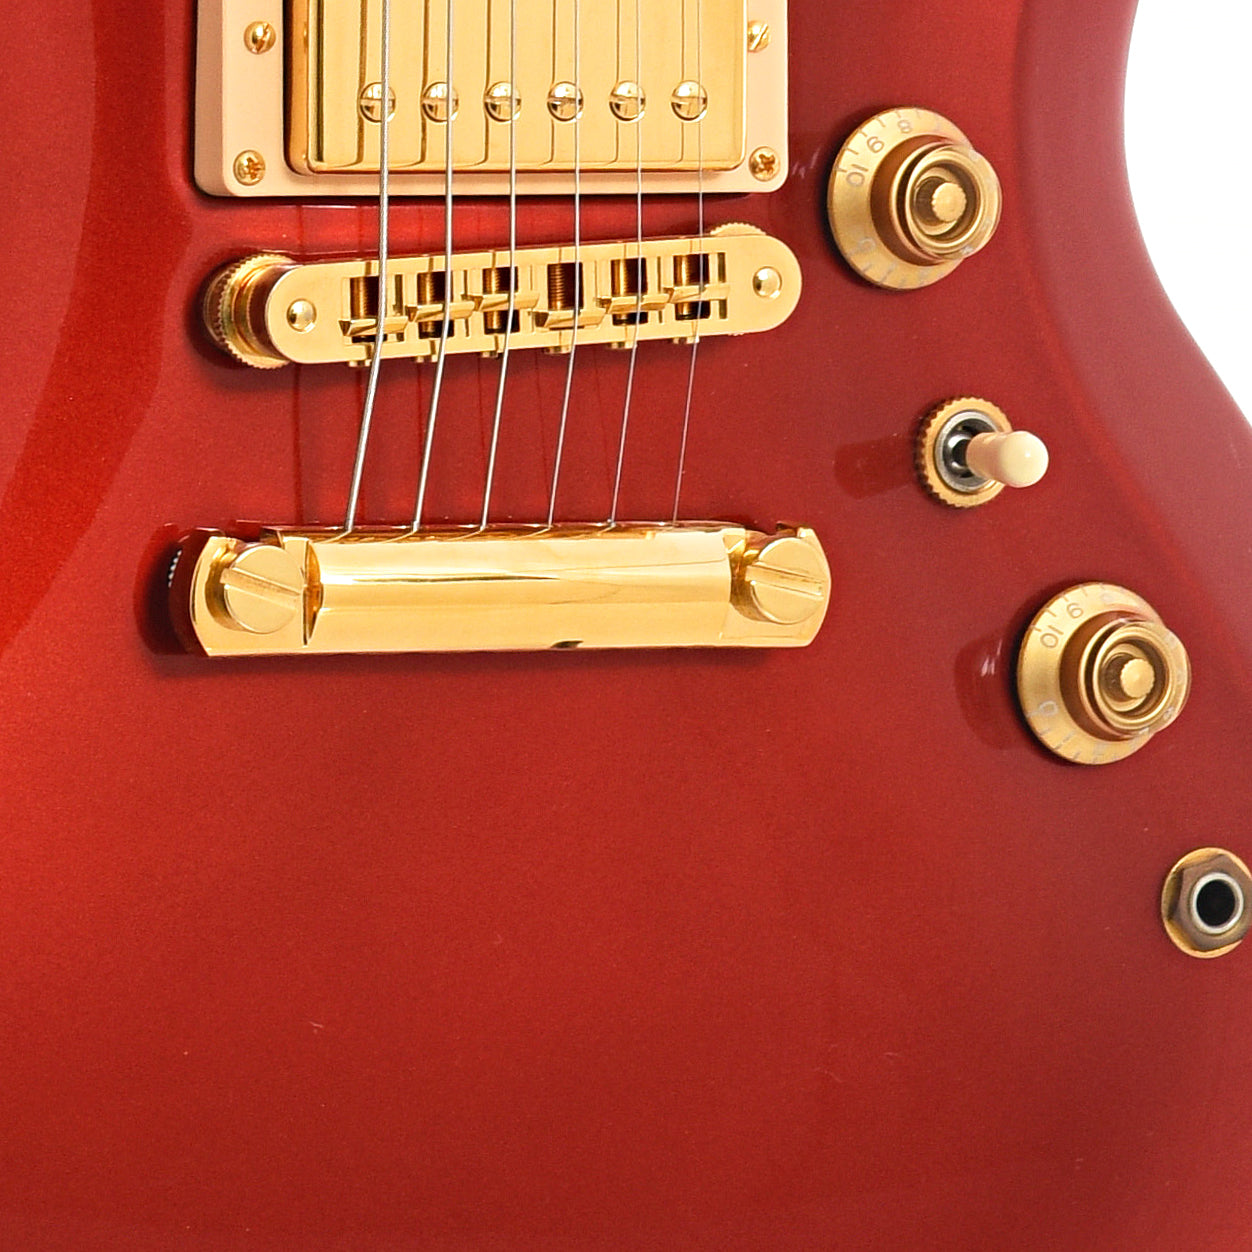 tailpiece, Bridge and controls of Gibson SG Diablo Electric Guitar (2008)